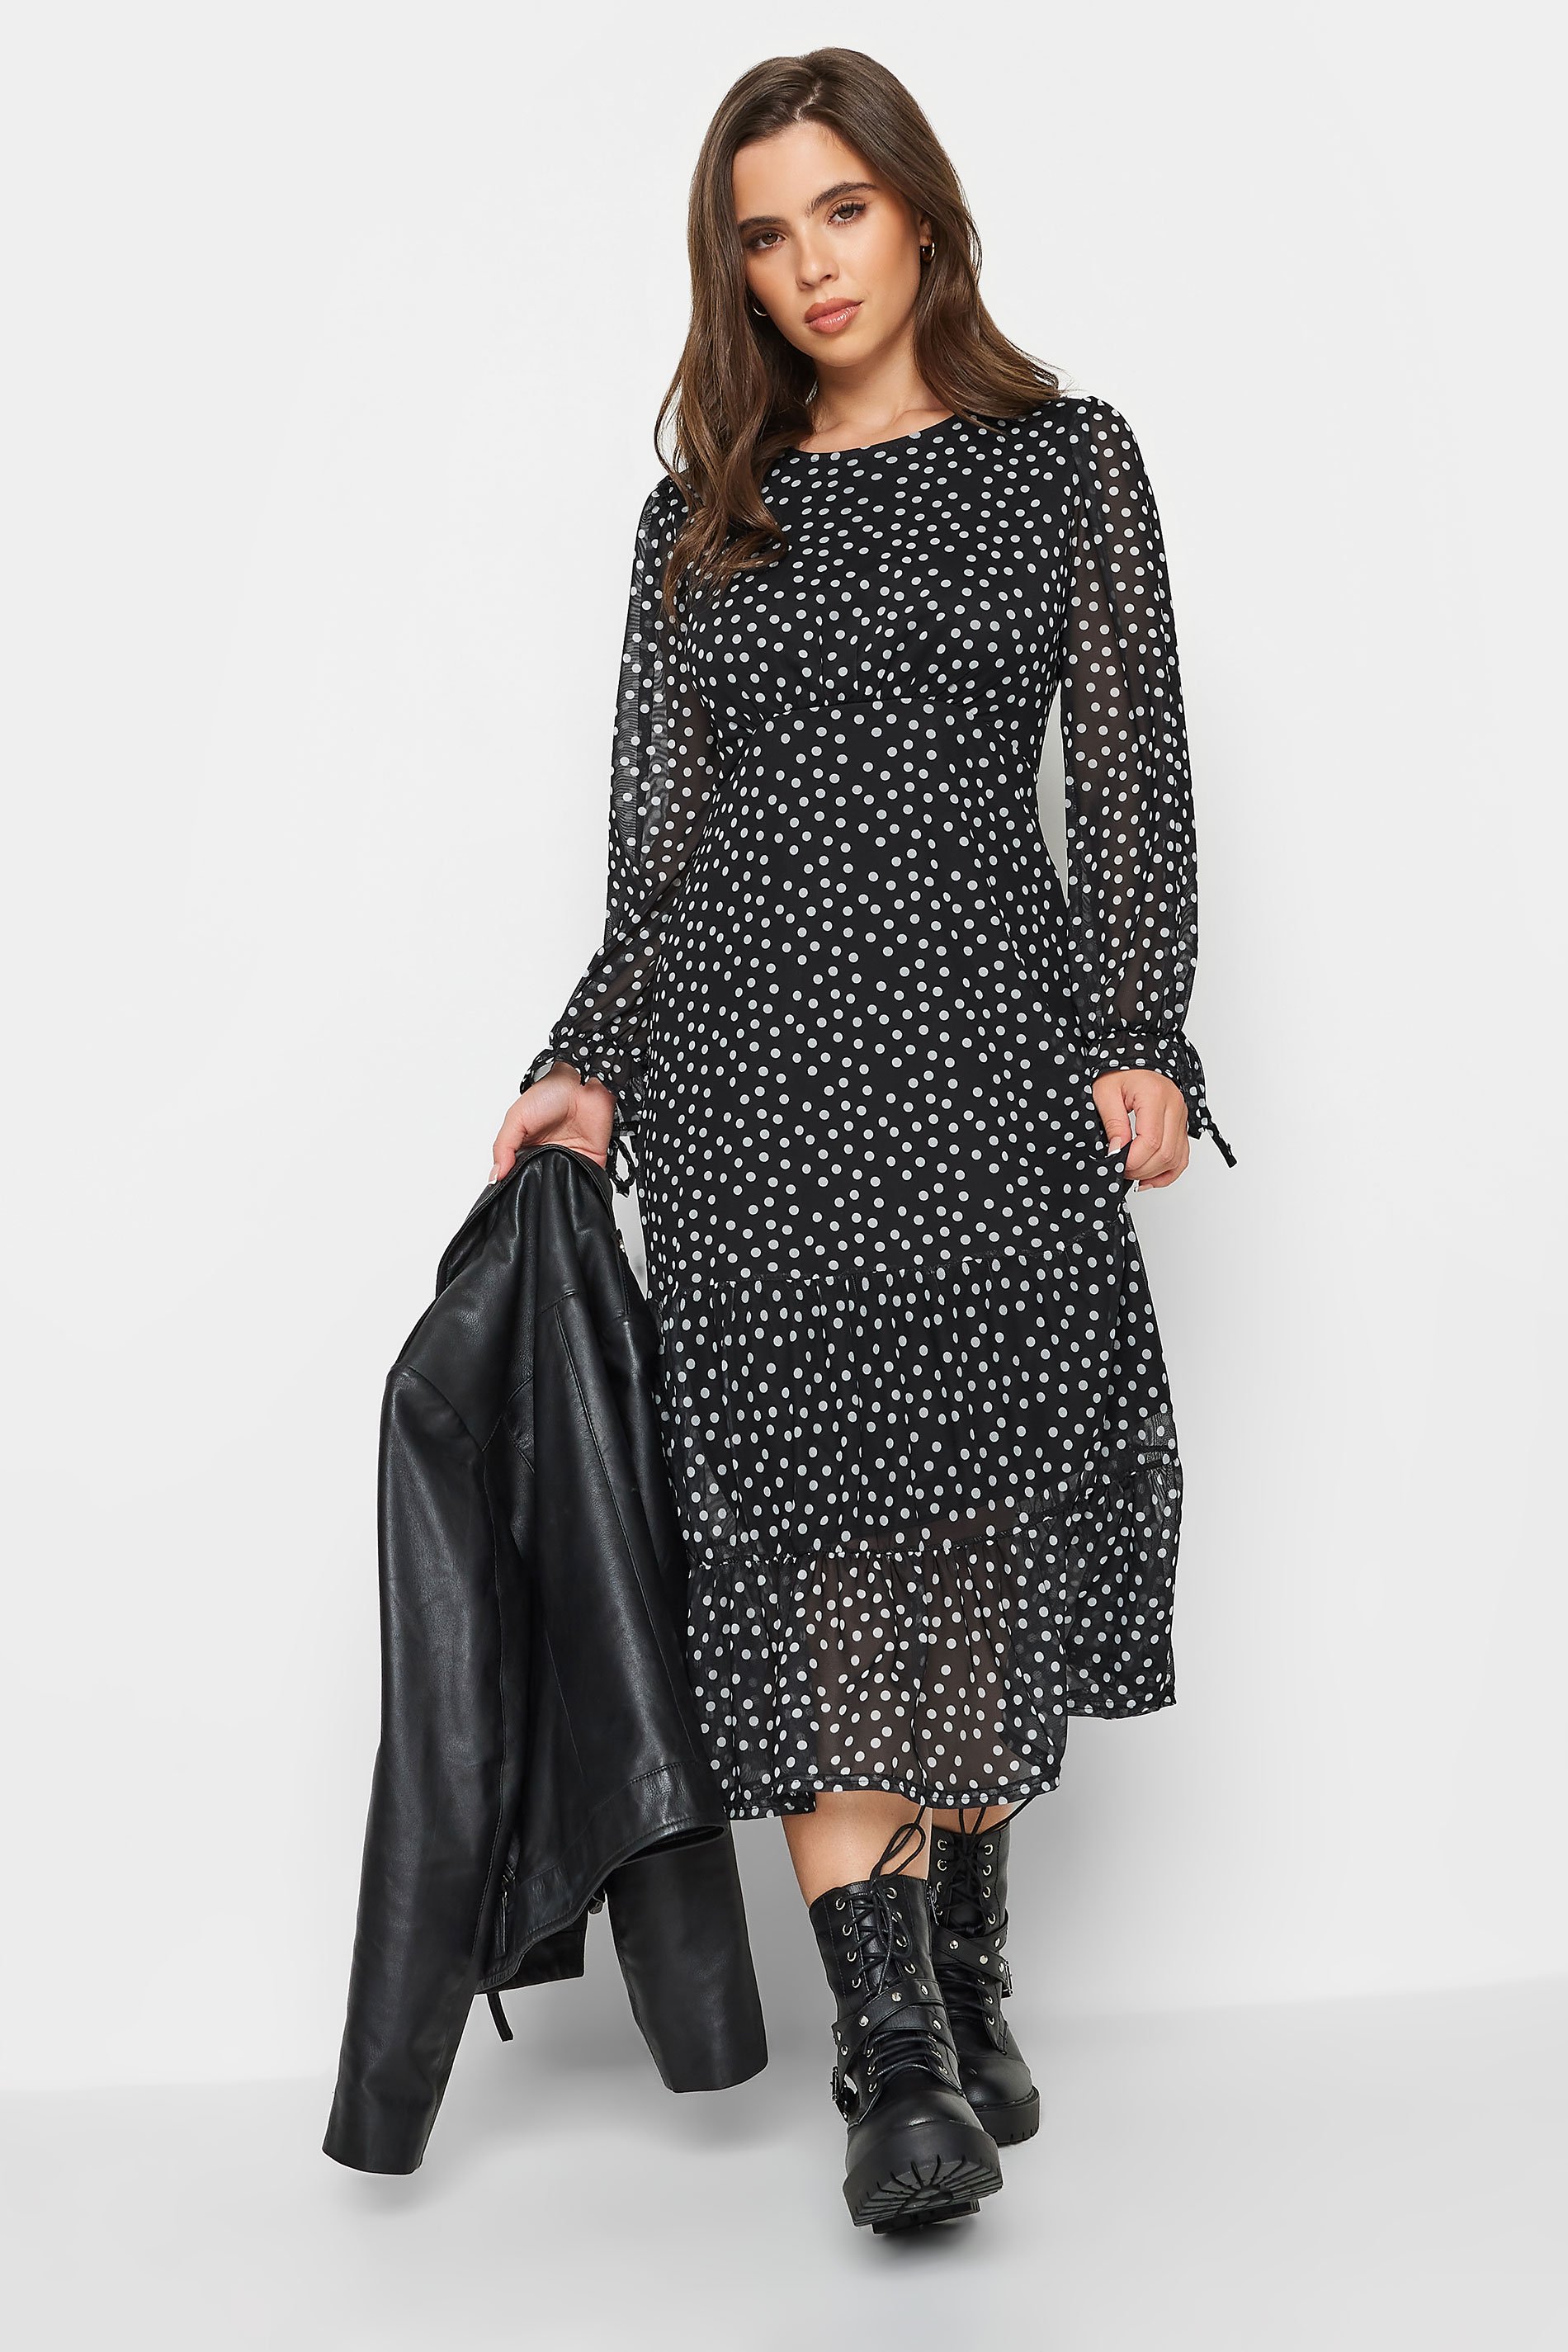 PixieGirl Black Polka Dot Print Mesh Dress | PixieGirl 1